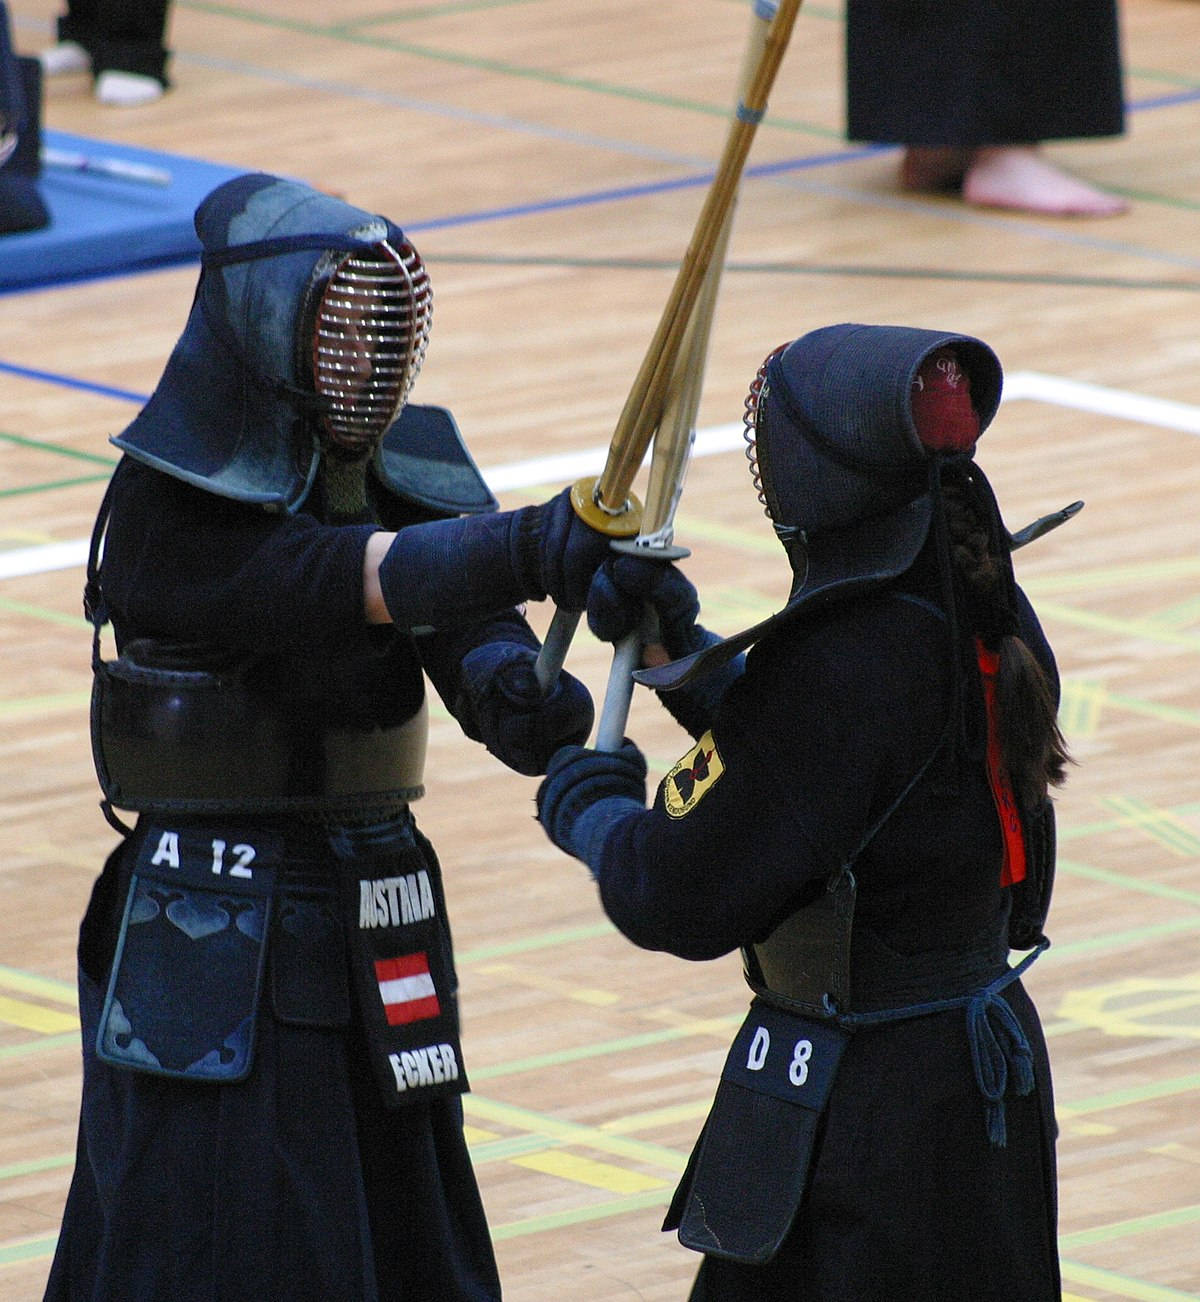 Intense Kendo Match at the European Championships Wallpaper